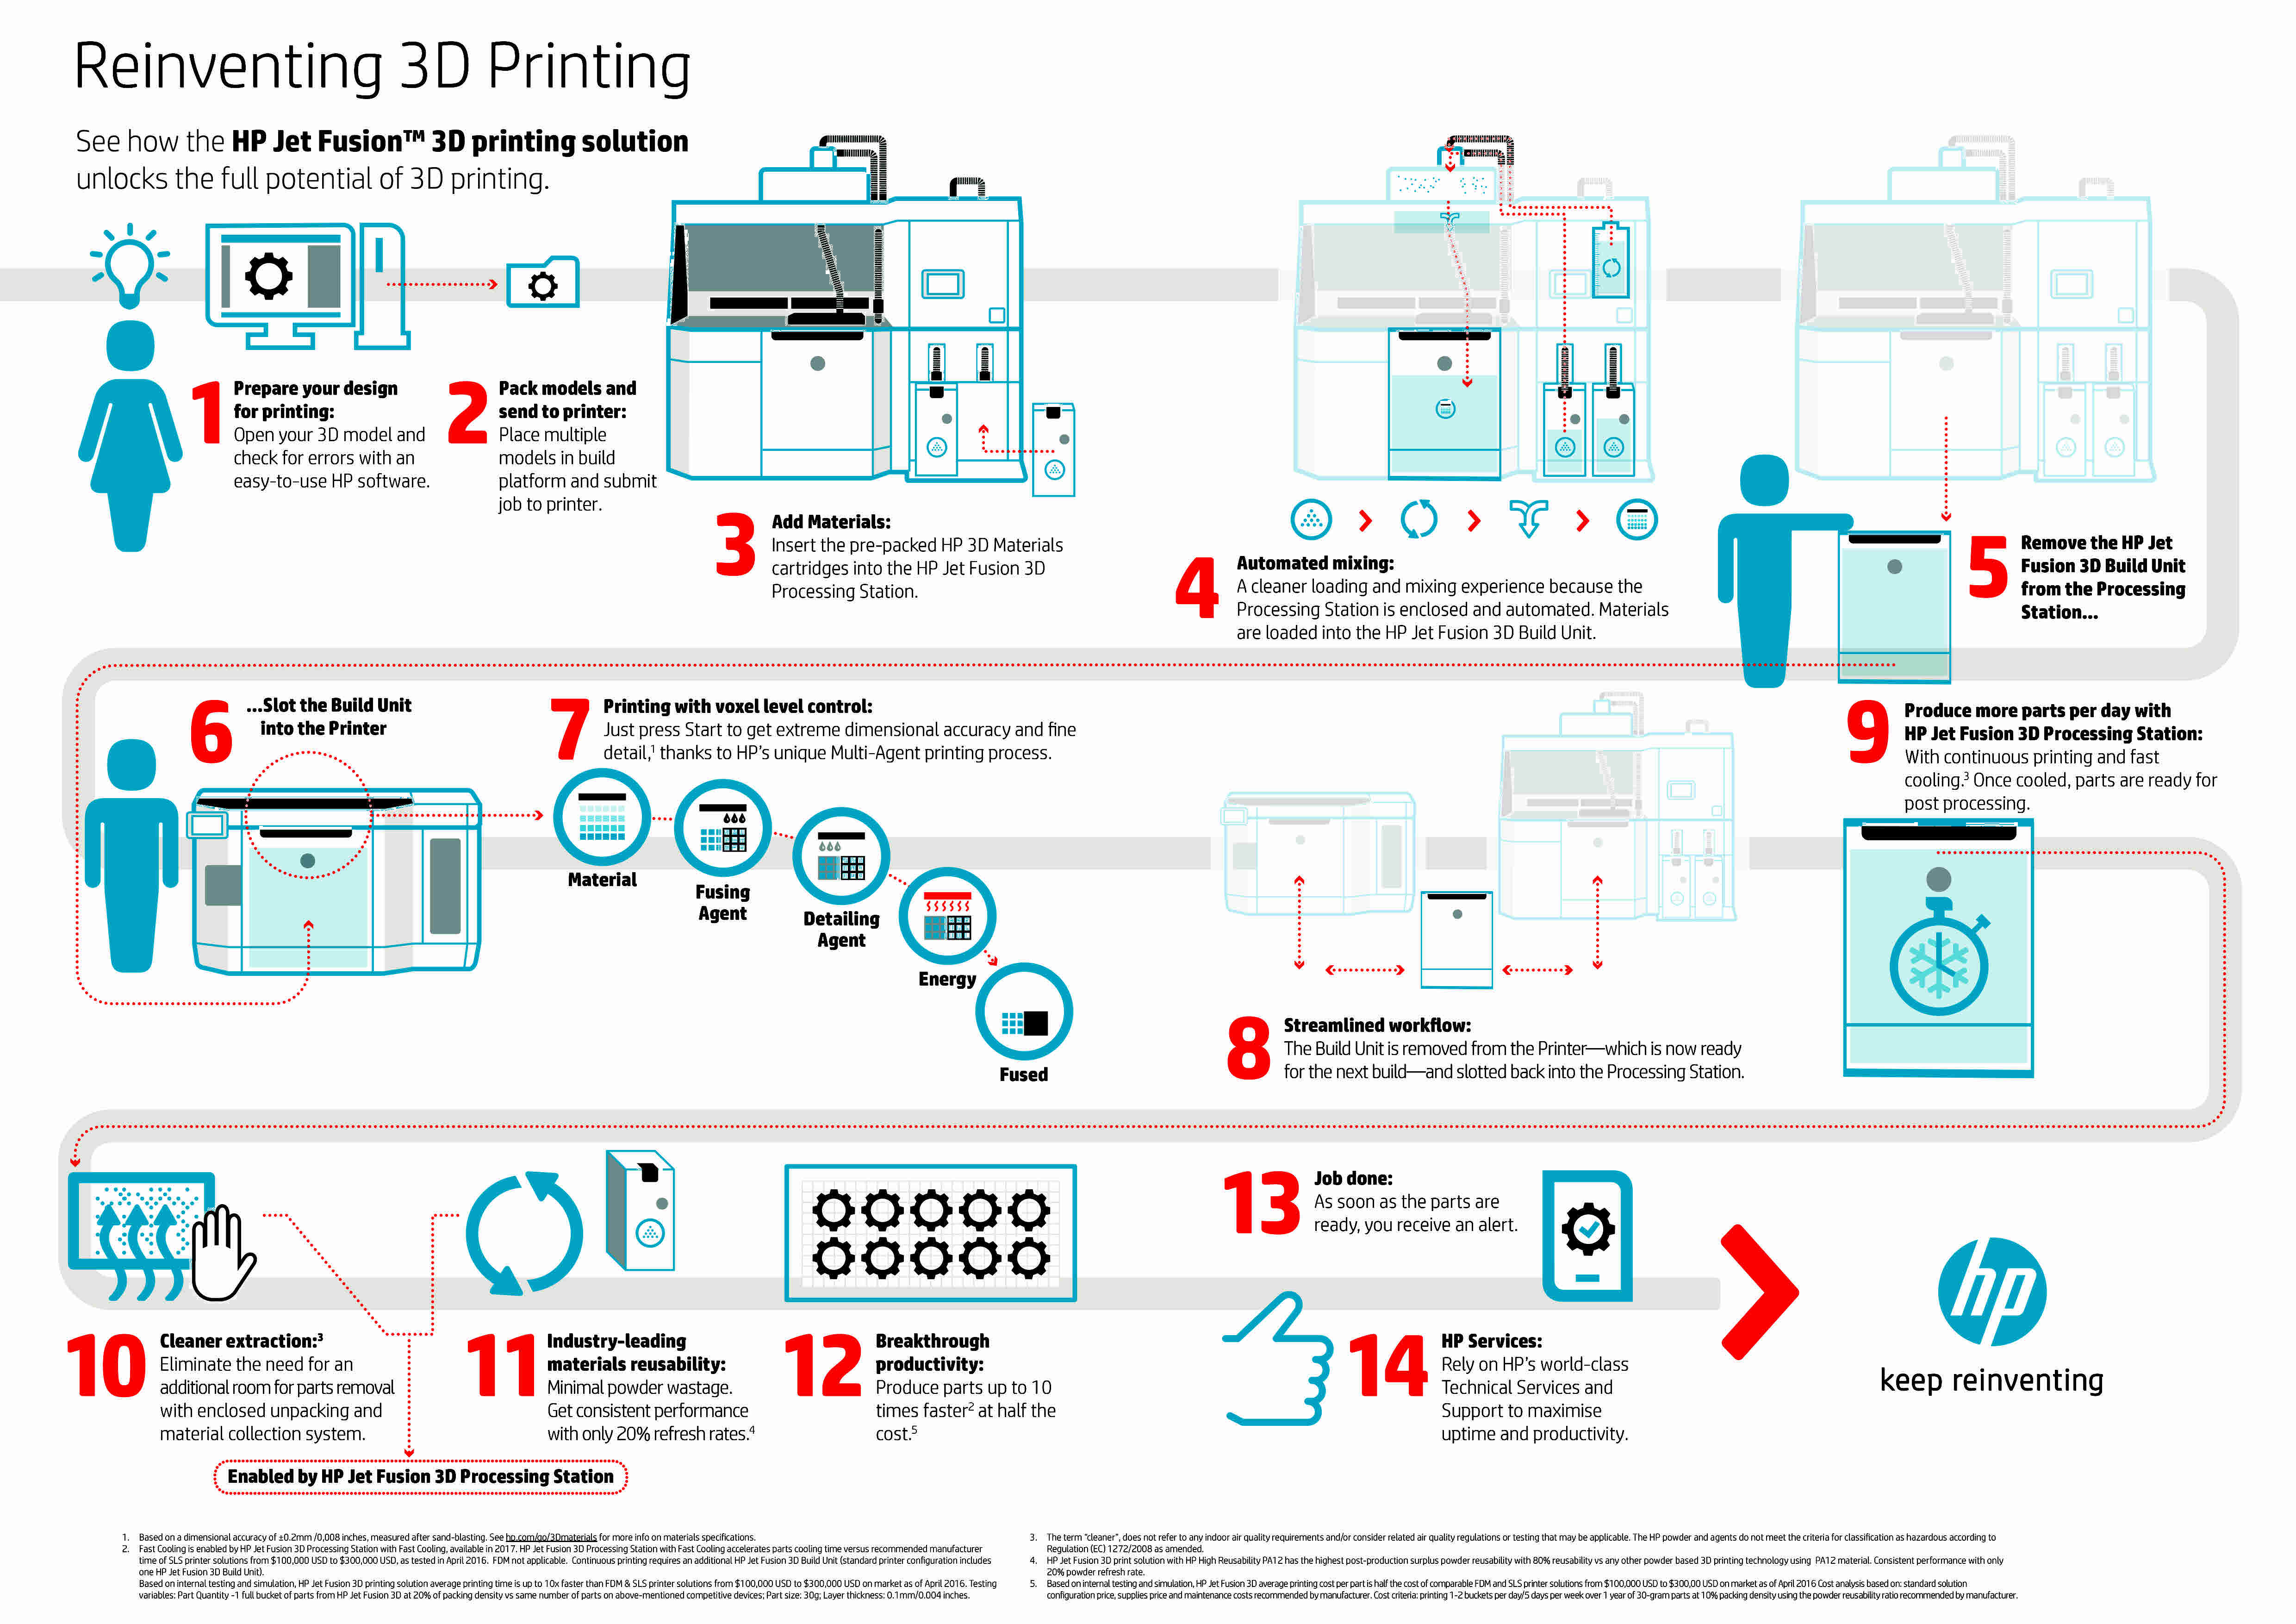 18 HP Printer 3D